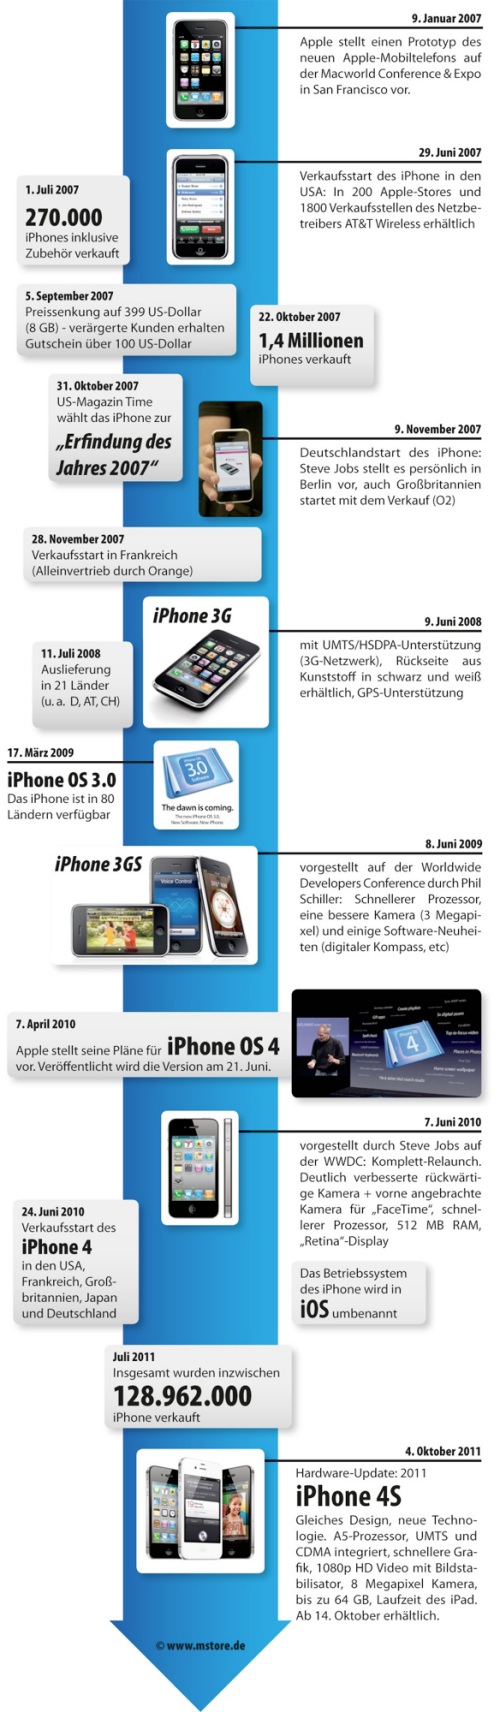 mstore: Infografik zur iPhone-Geschichte